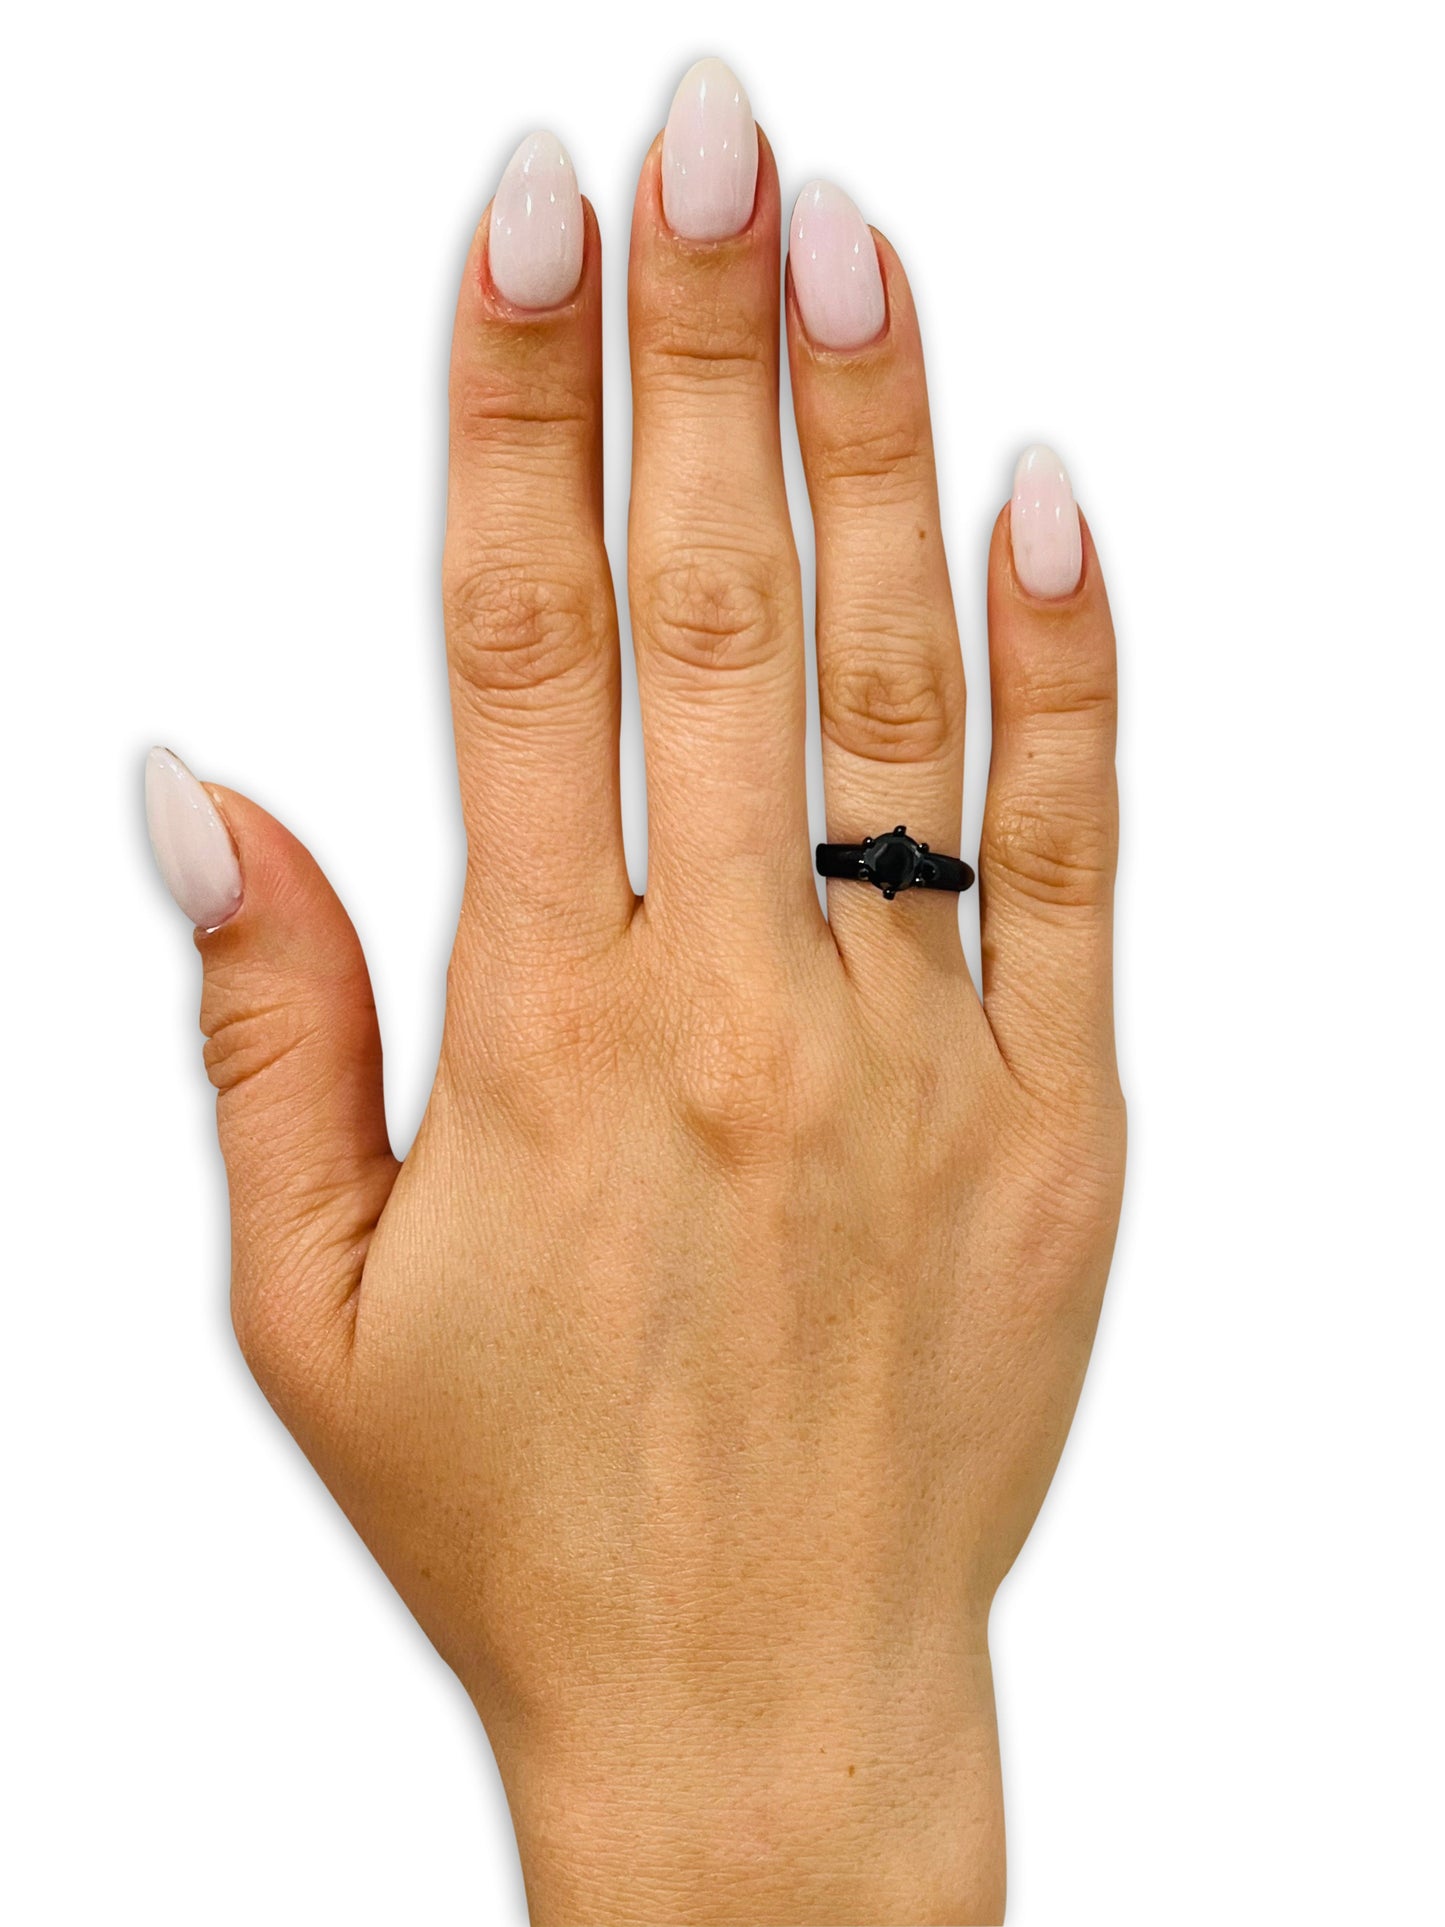 Solitaire Wedding Ring Black CZ Wedding Ring Proposal Ring Engagement